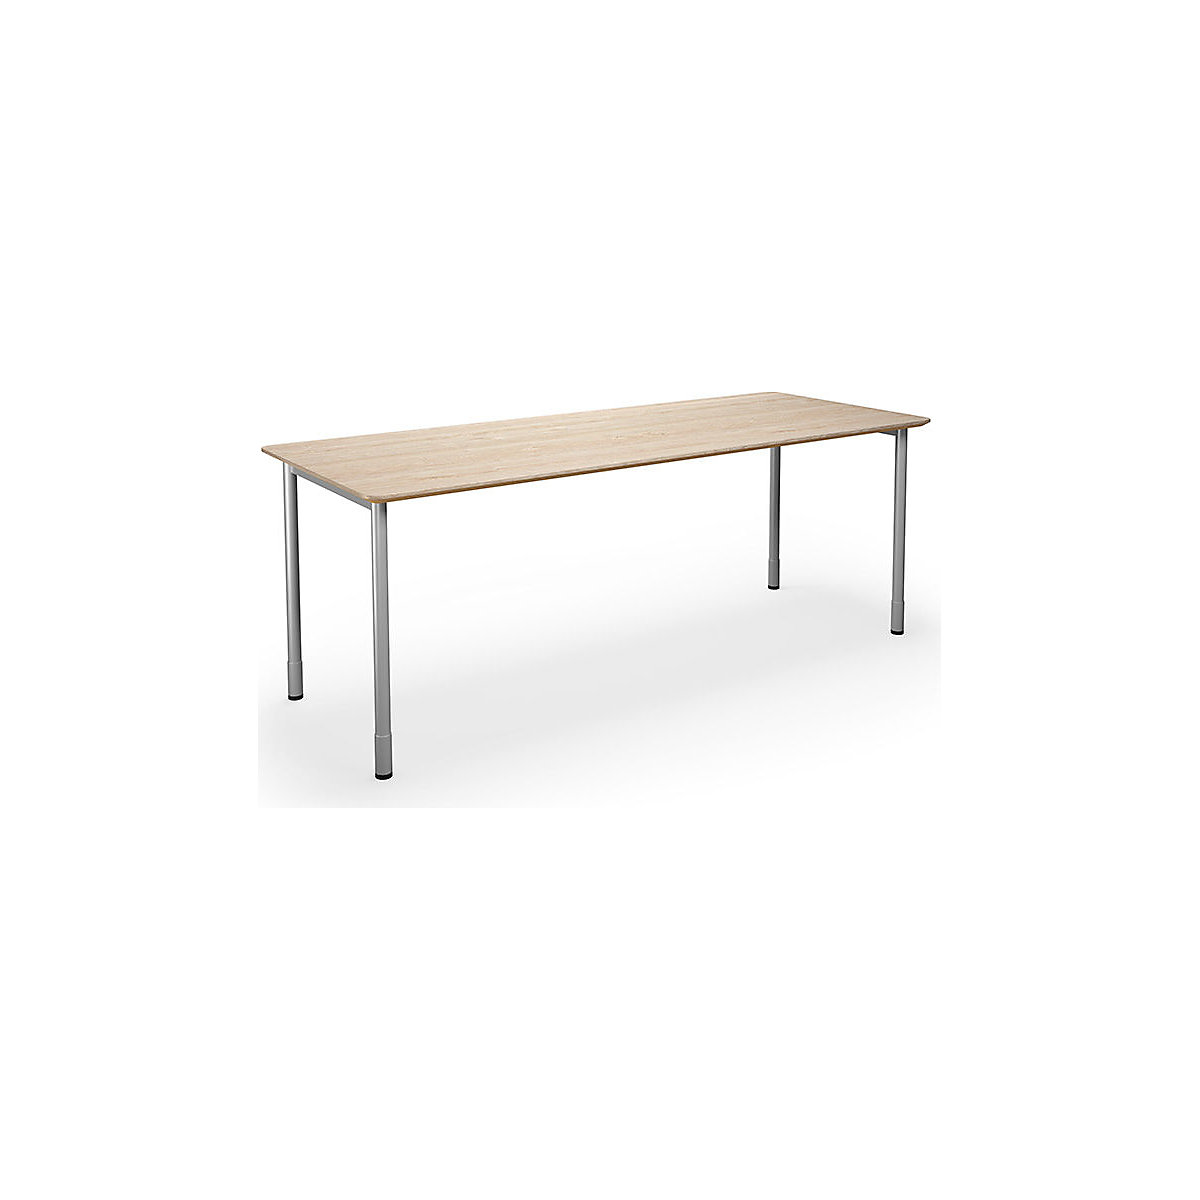 DUO-C Trend multi-purpose desk, straight tabletop, rounded corners, WxD 1800 x 800 mm, oak, silver-1